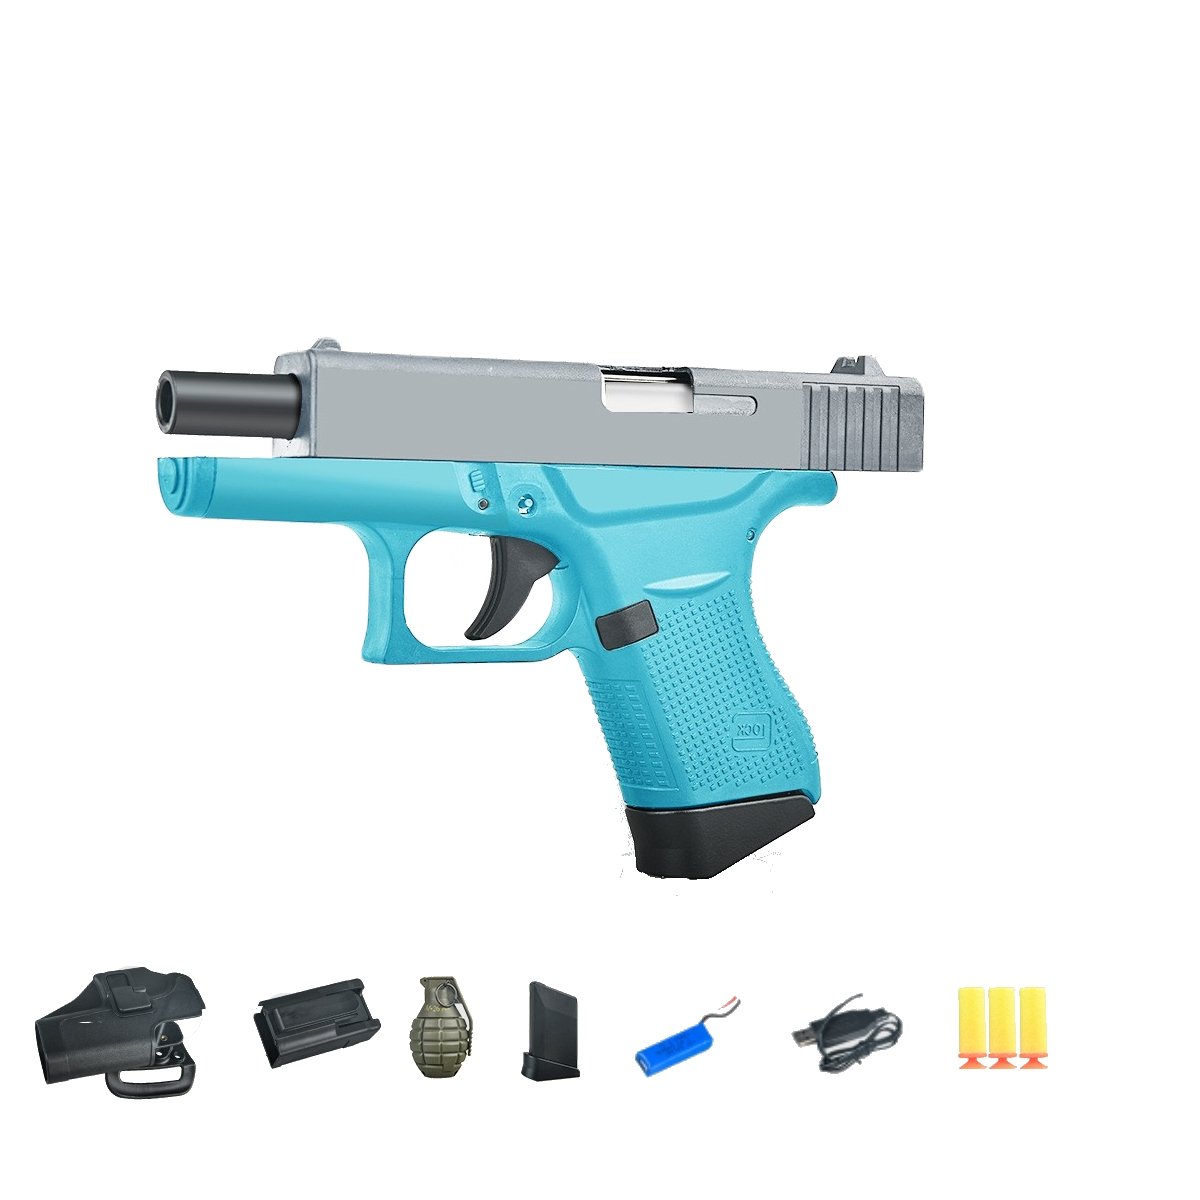 Jinming G43 gel blaster nerf gun kids best gift - AKgelblaster - US stock